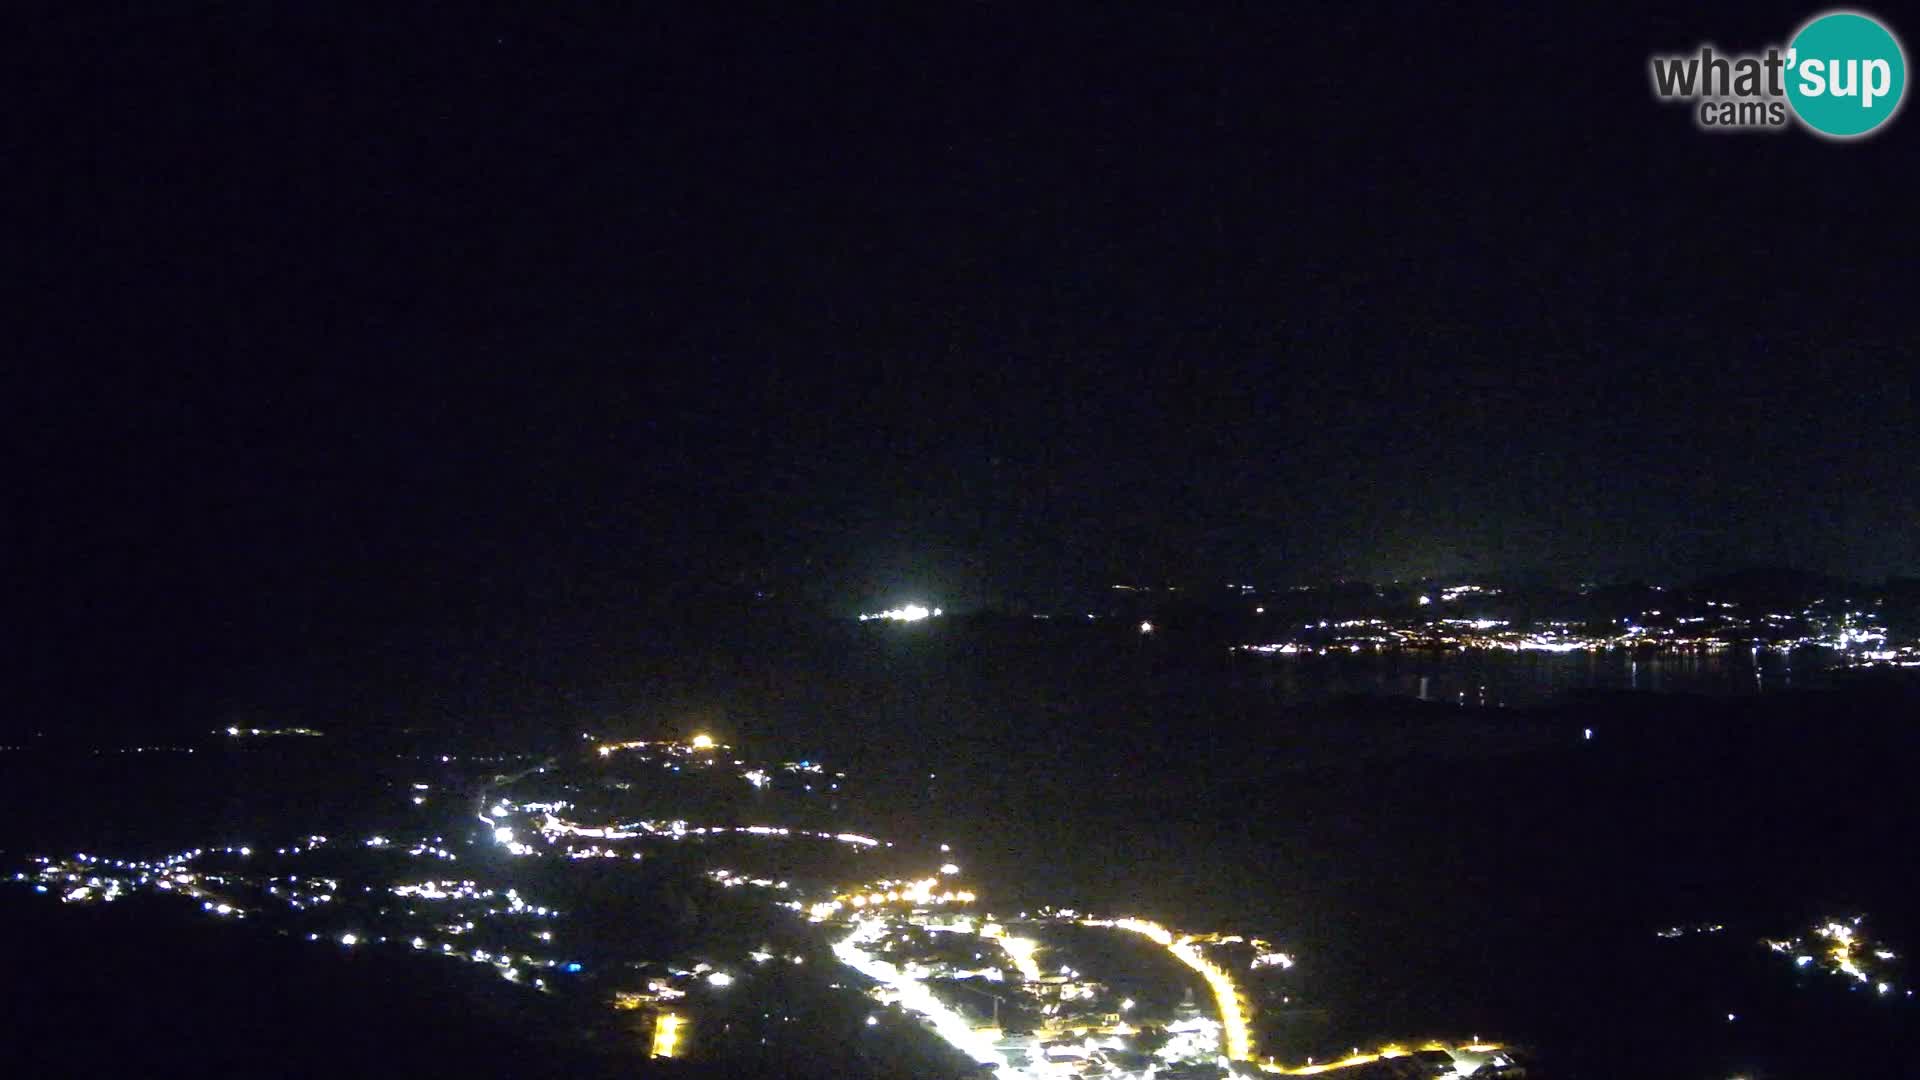 Monte Moro livecam Costa Smeralda vue panoramique Sardaigne